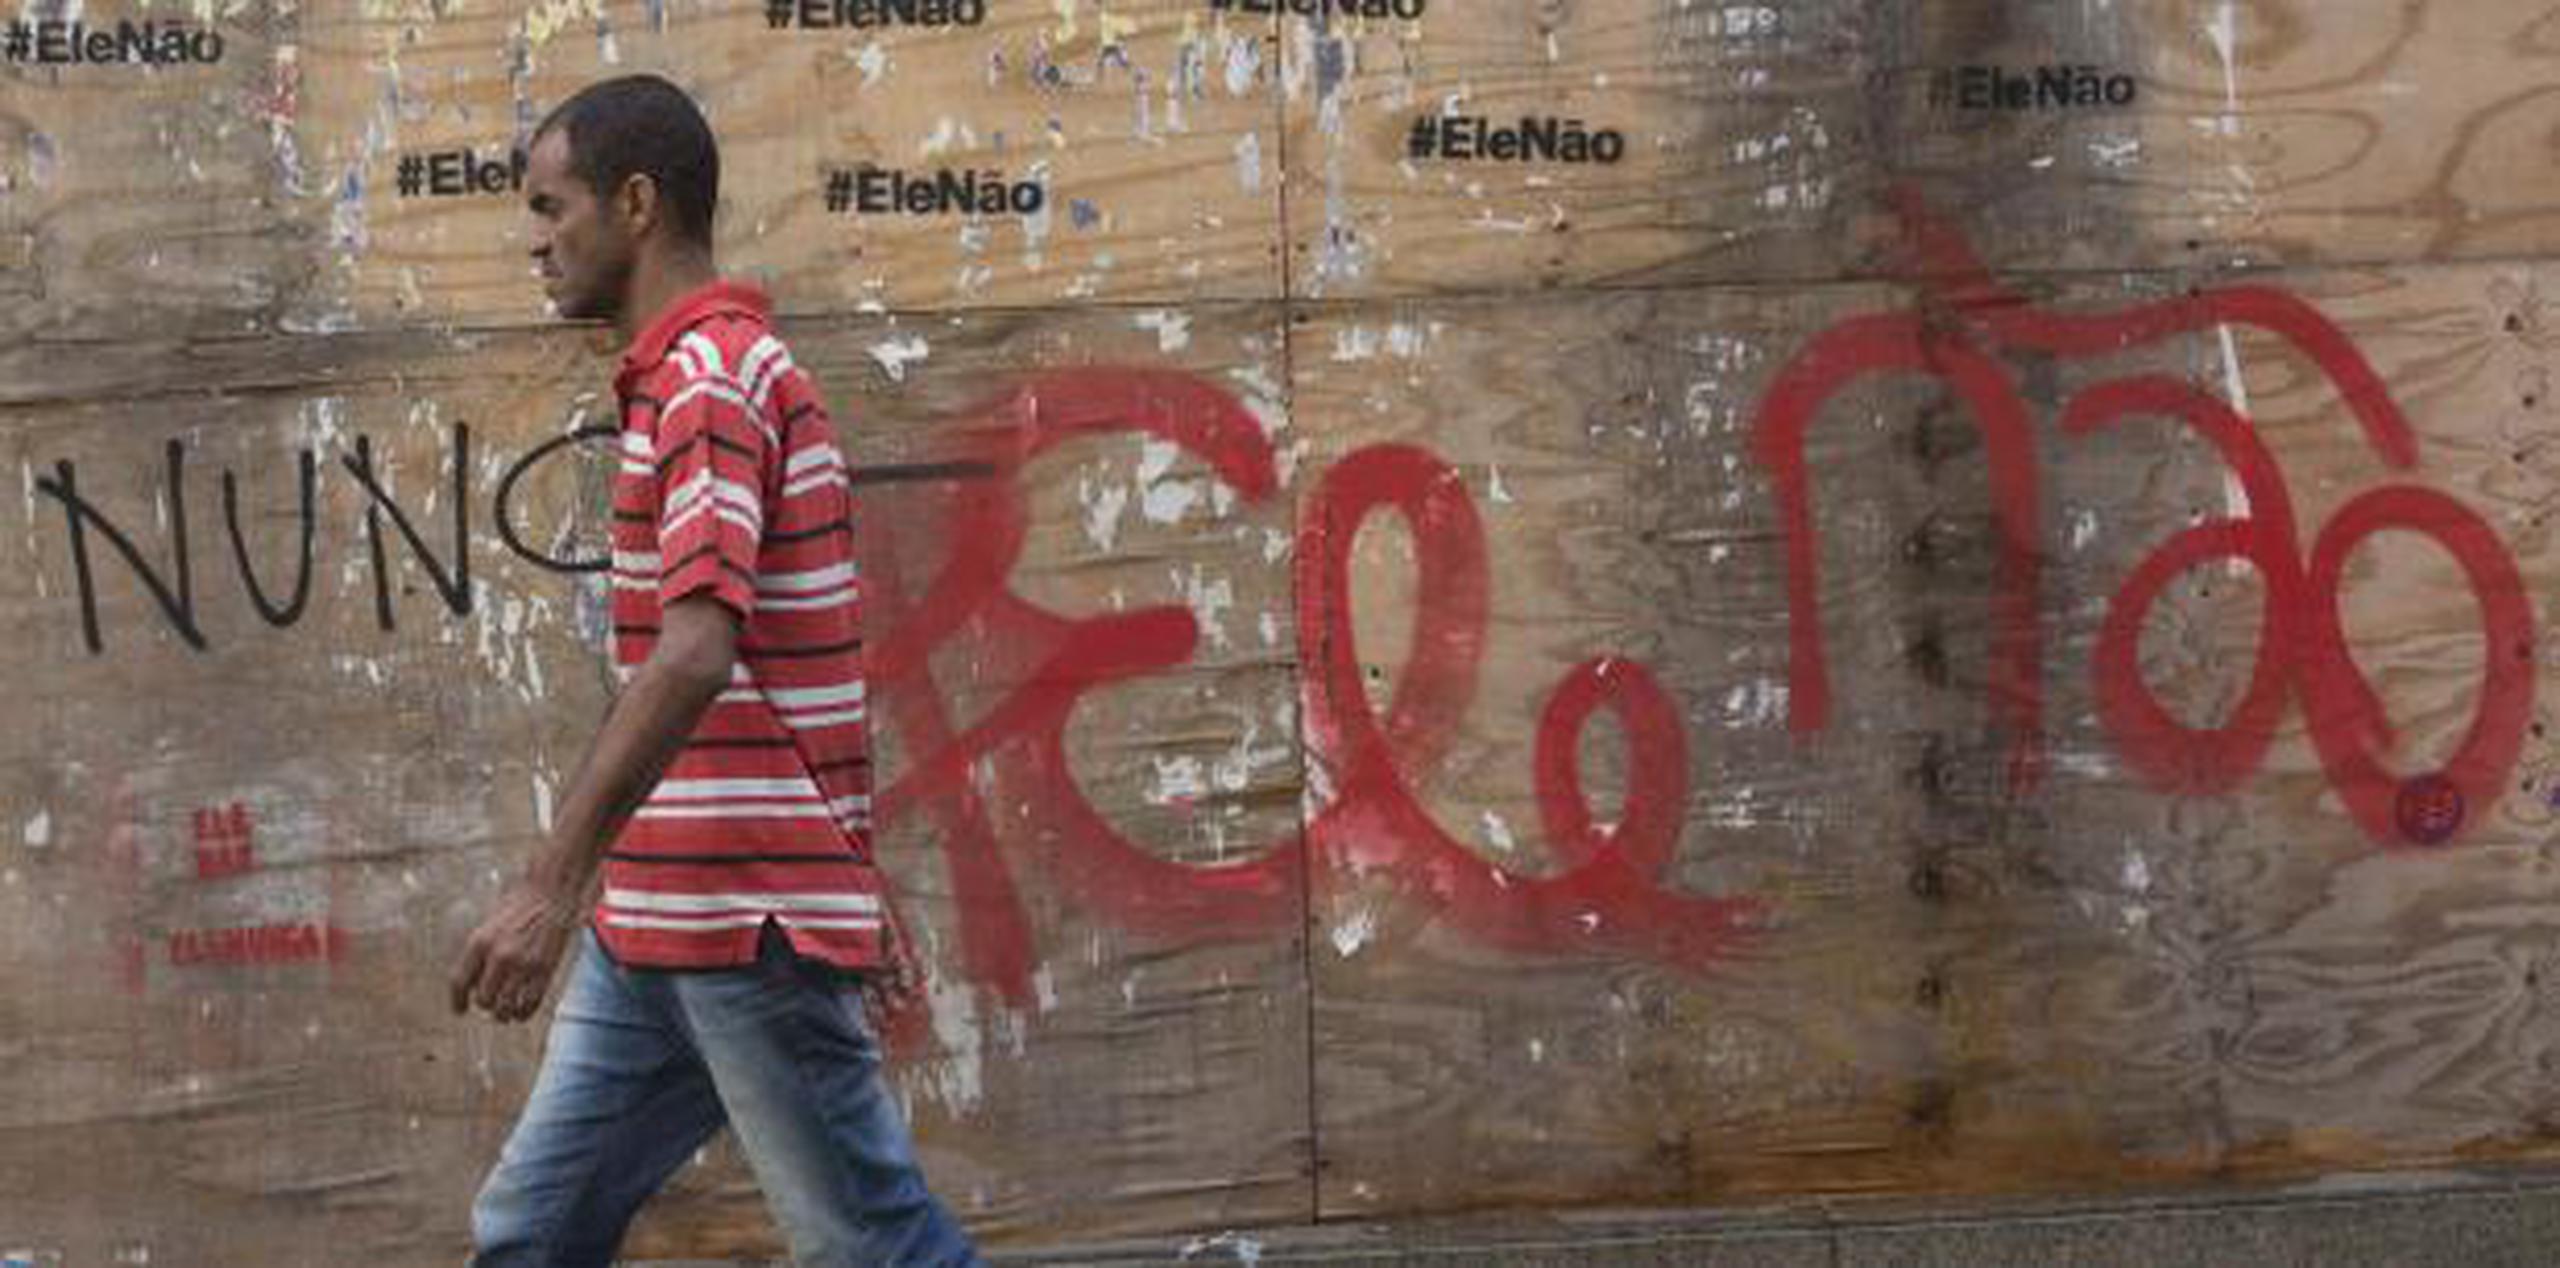 Un hombre pasa junto a un graffiti que dice en portugués: "No él" en Río de Janeiro, (AP)